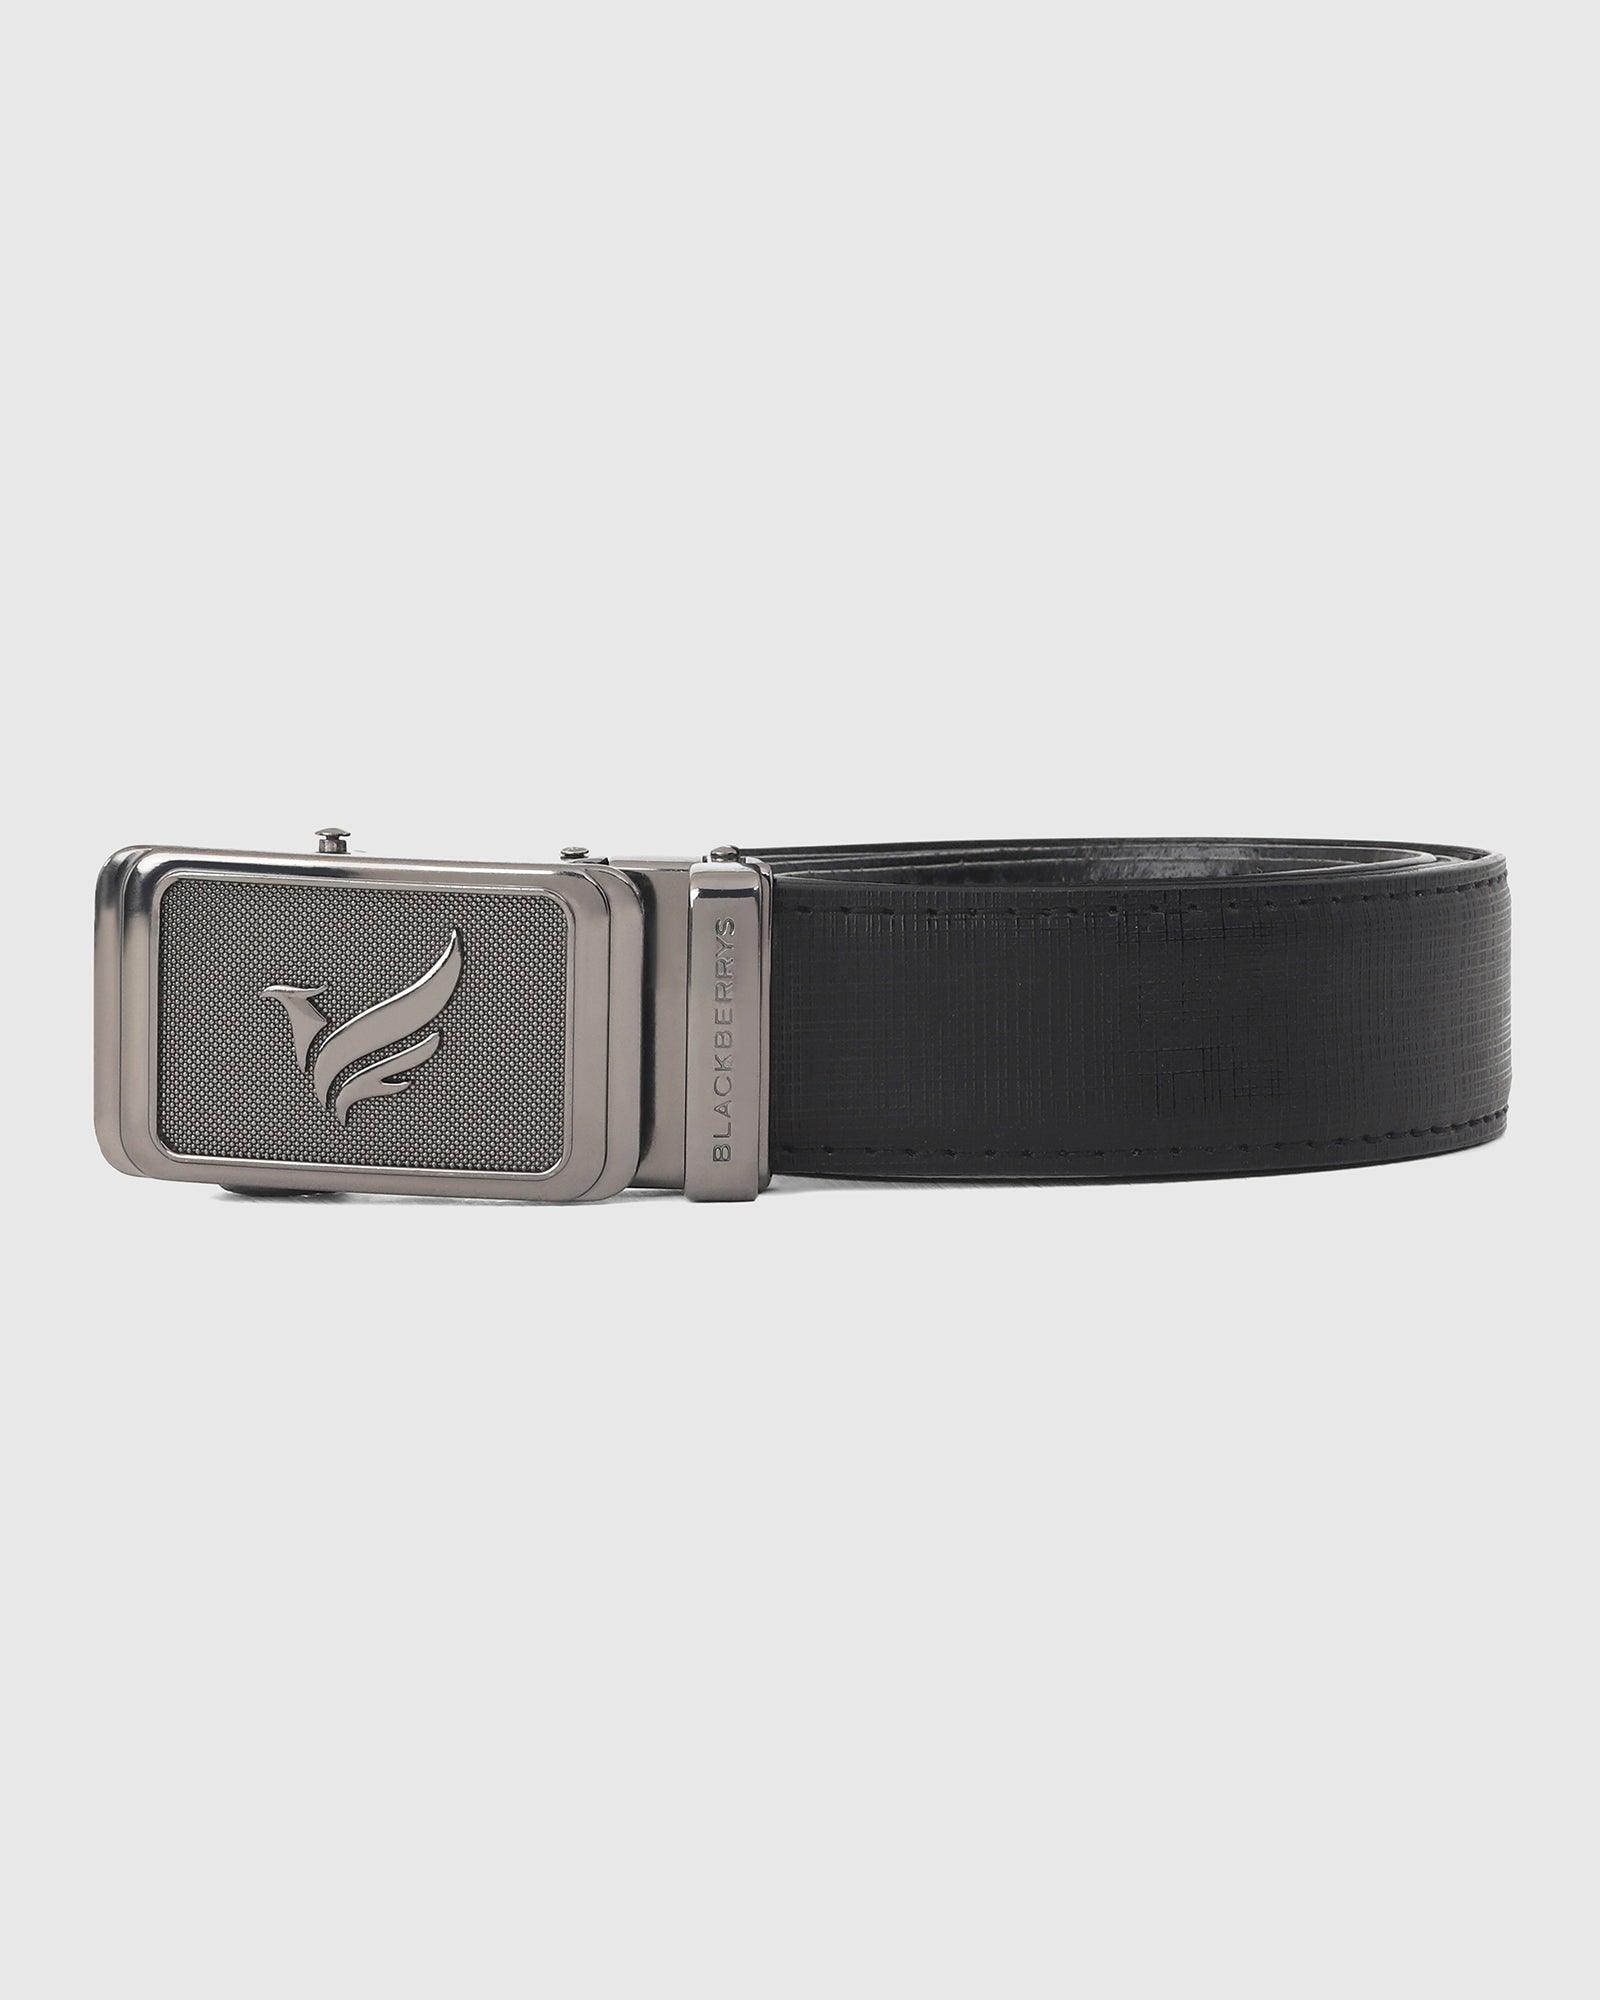 Leather Black Textured Belt - Quadren